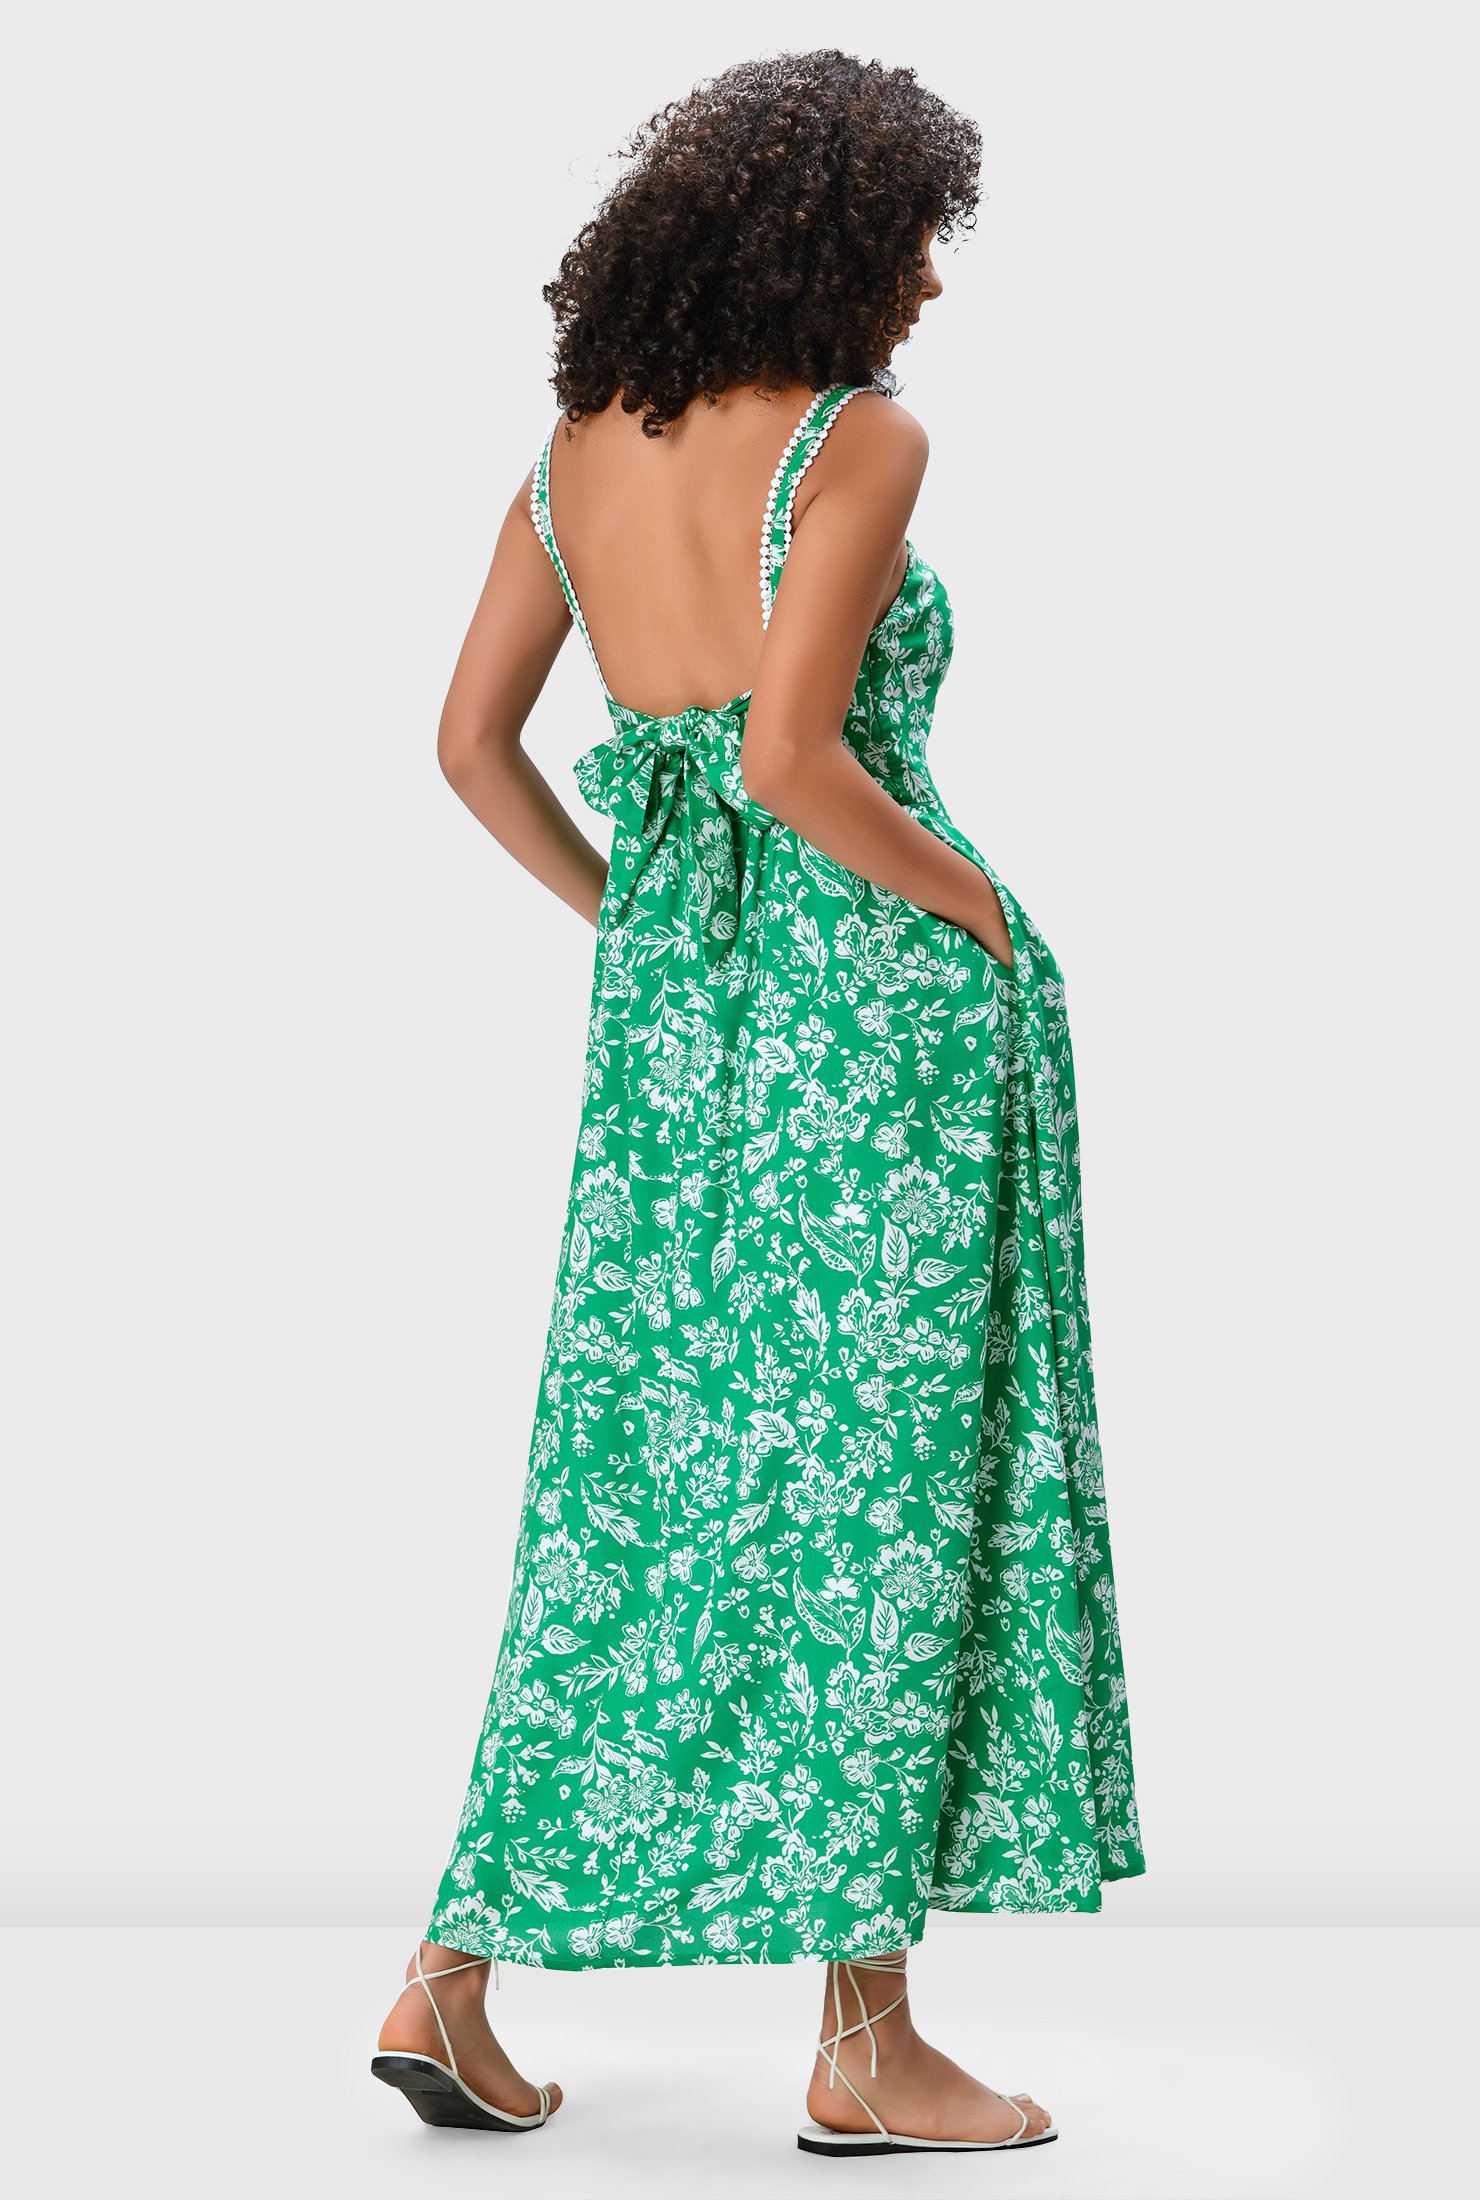 Shop Bow-tie back floral print sundress | eShakti